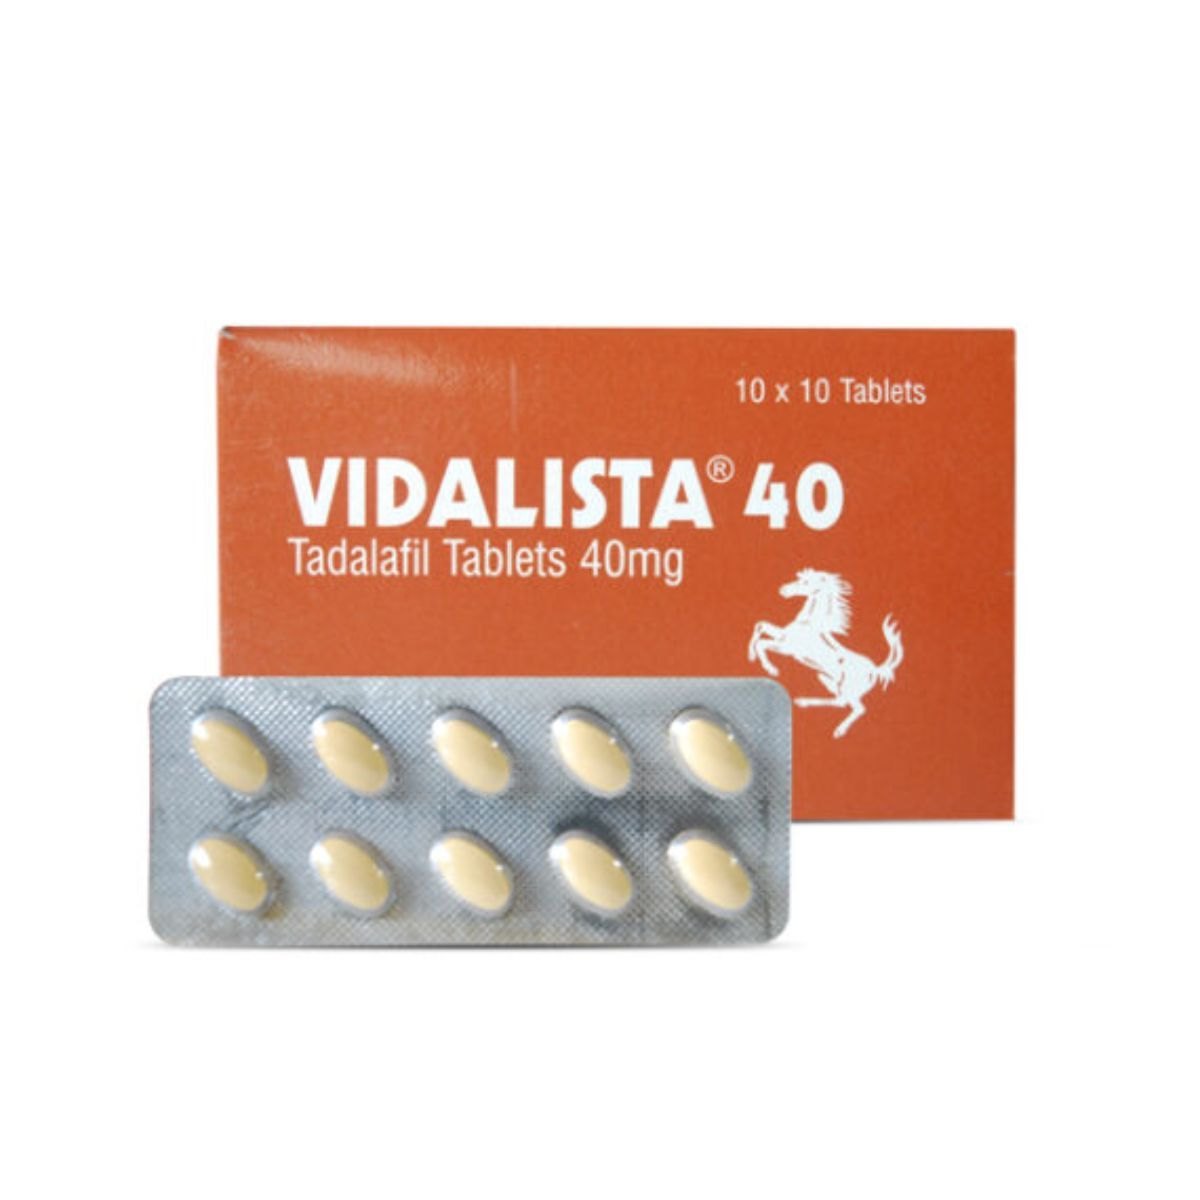 Vidalista 40 Mg | Uses, Price, Interaction, Benefits & More